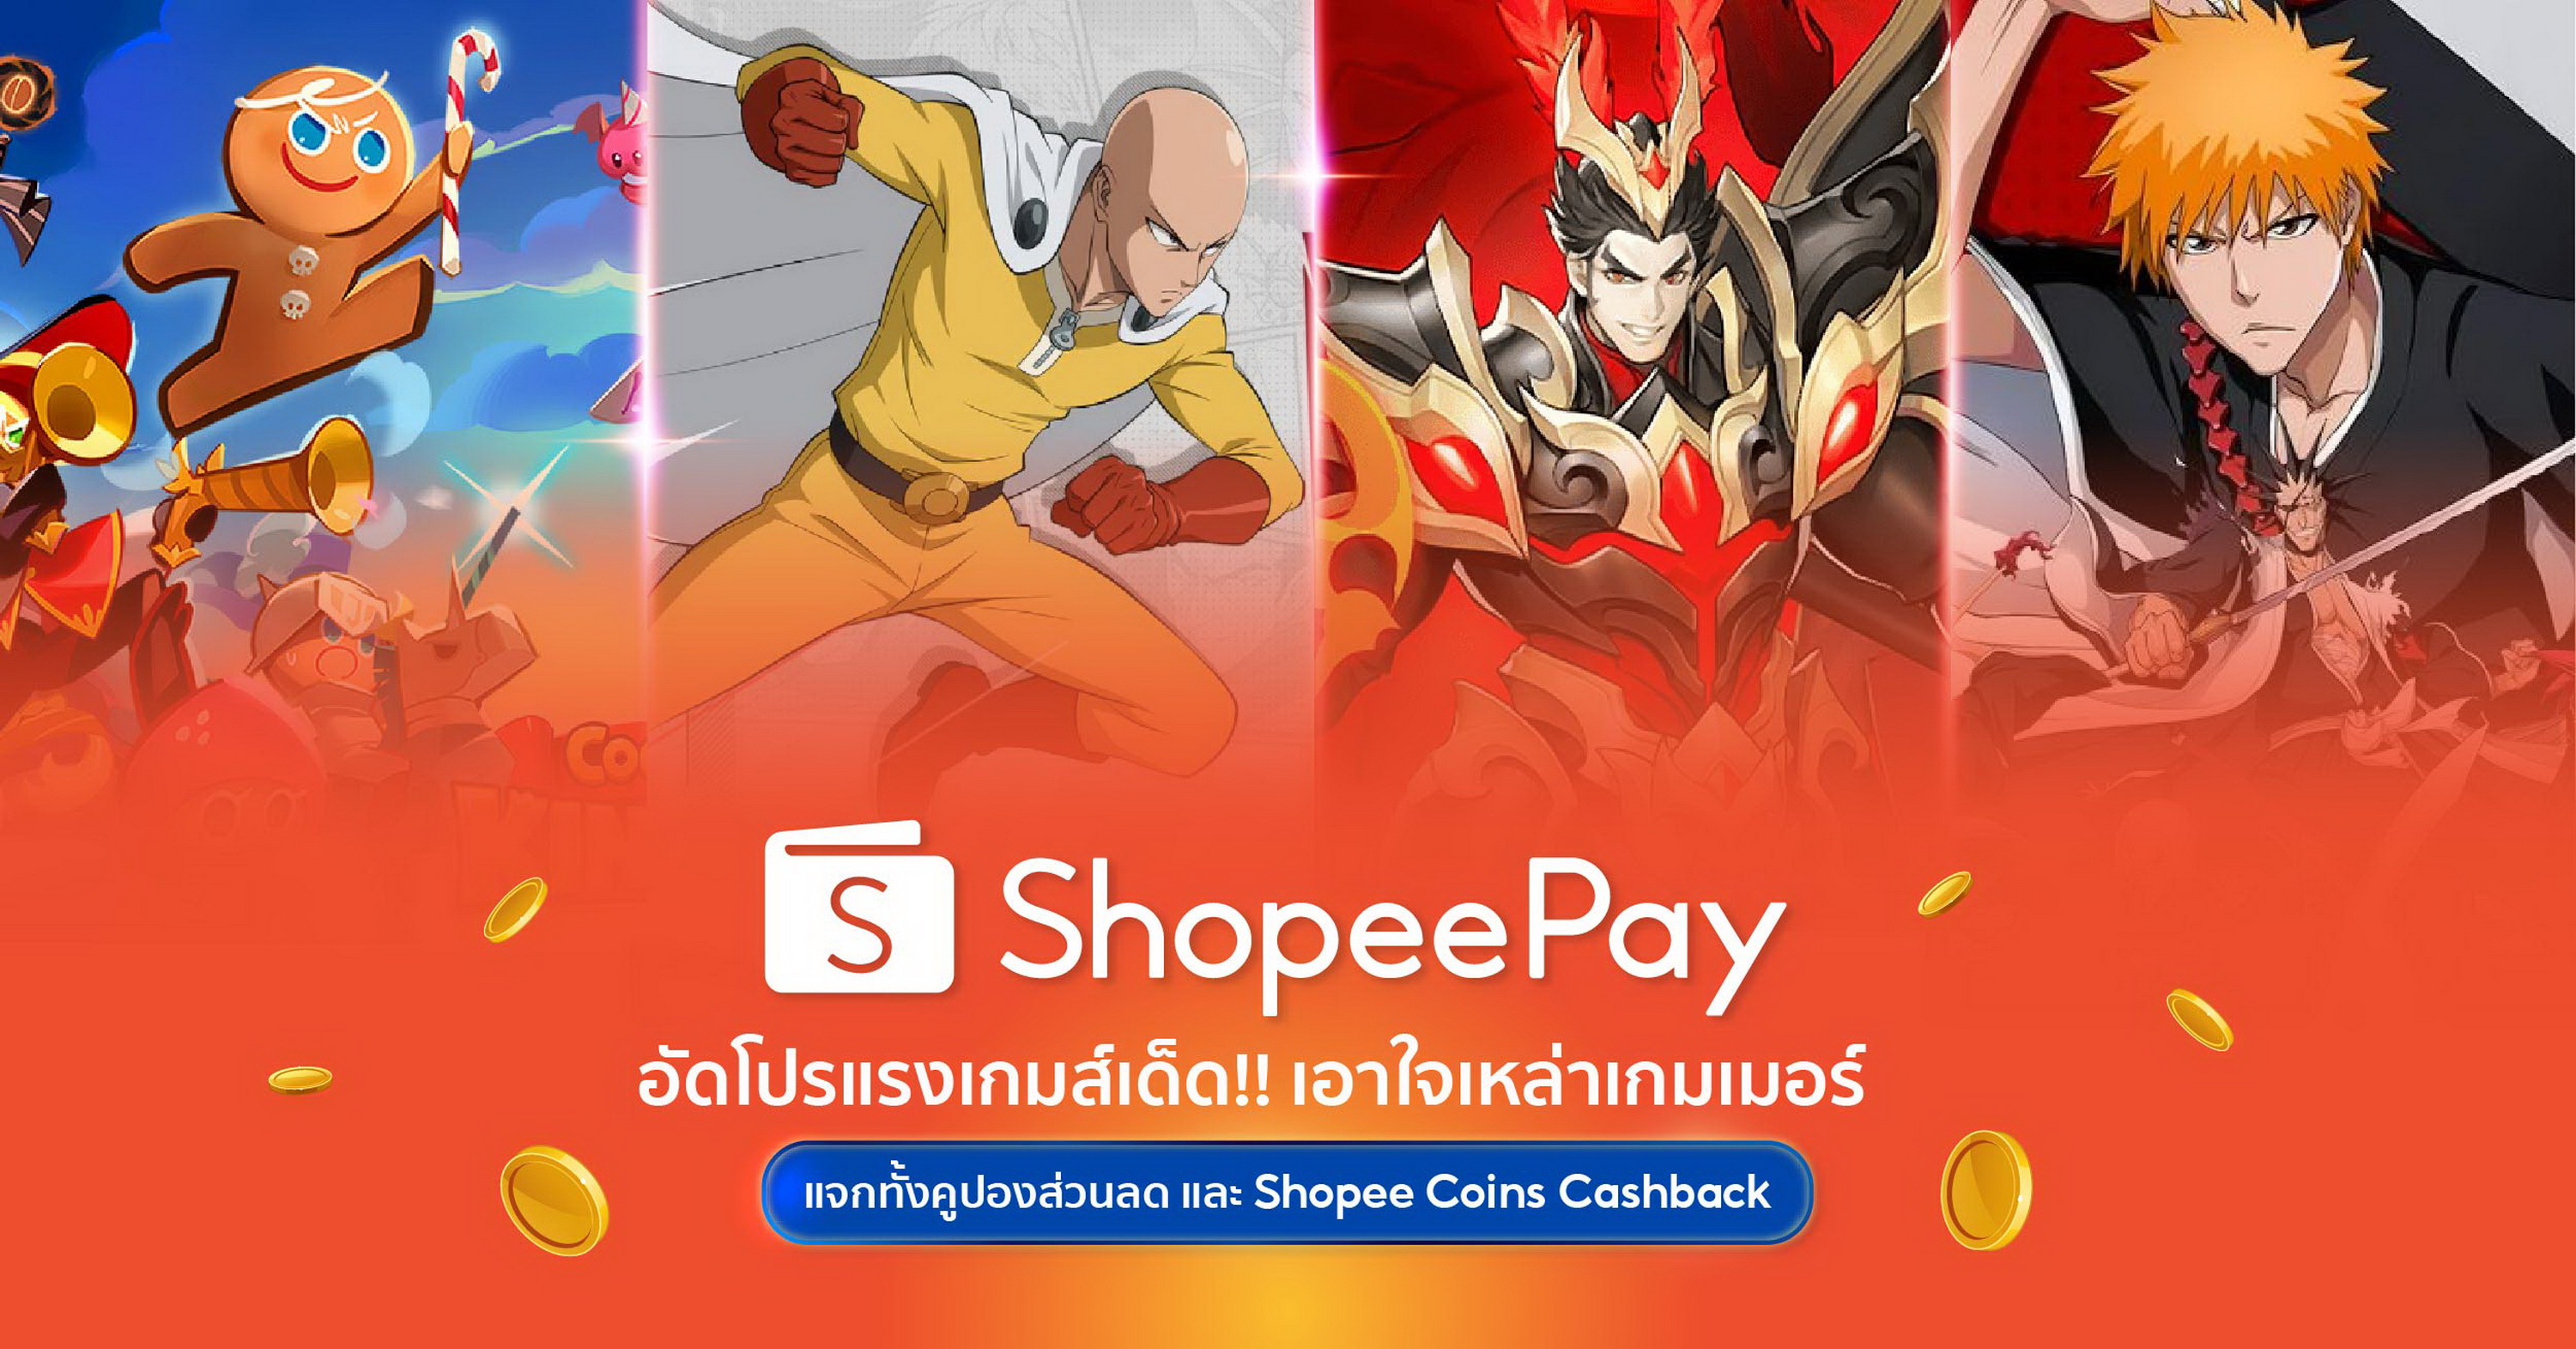 ‘ShopeePay’ อัดโปรแรงเกมเด็ด!! เอาใจเหล่าเกมเมอร์  ทั้งคูปองส่วนลดและ Shopee coins cashback แบบจัดเต็ม!